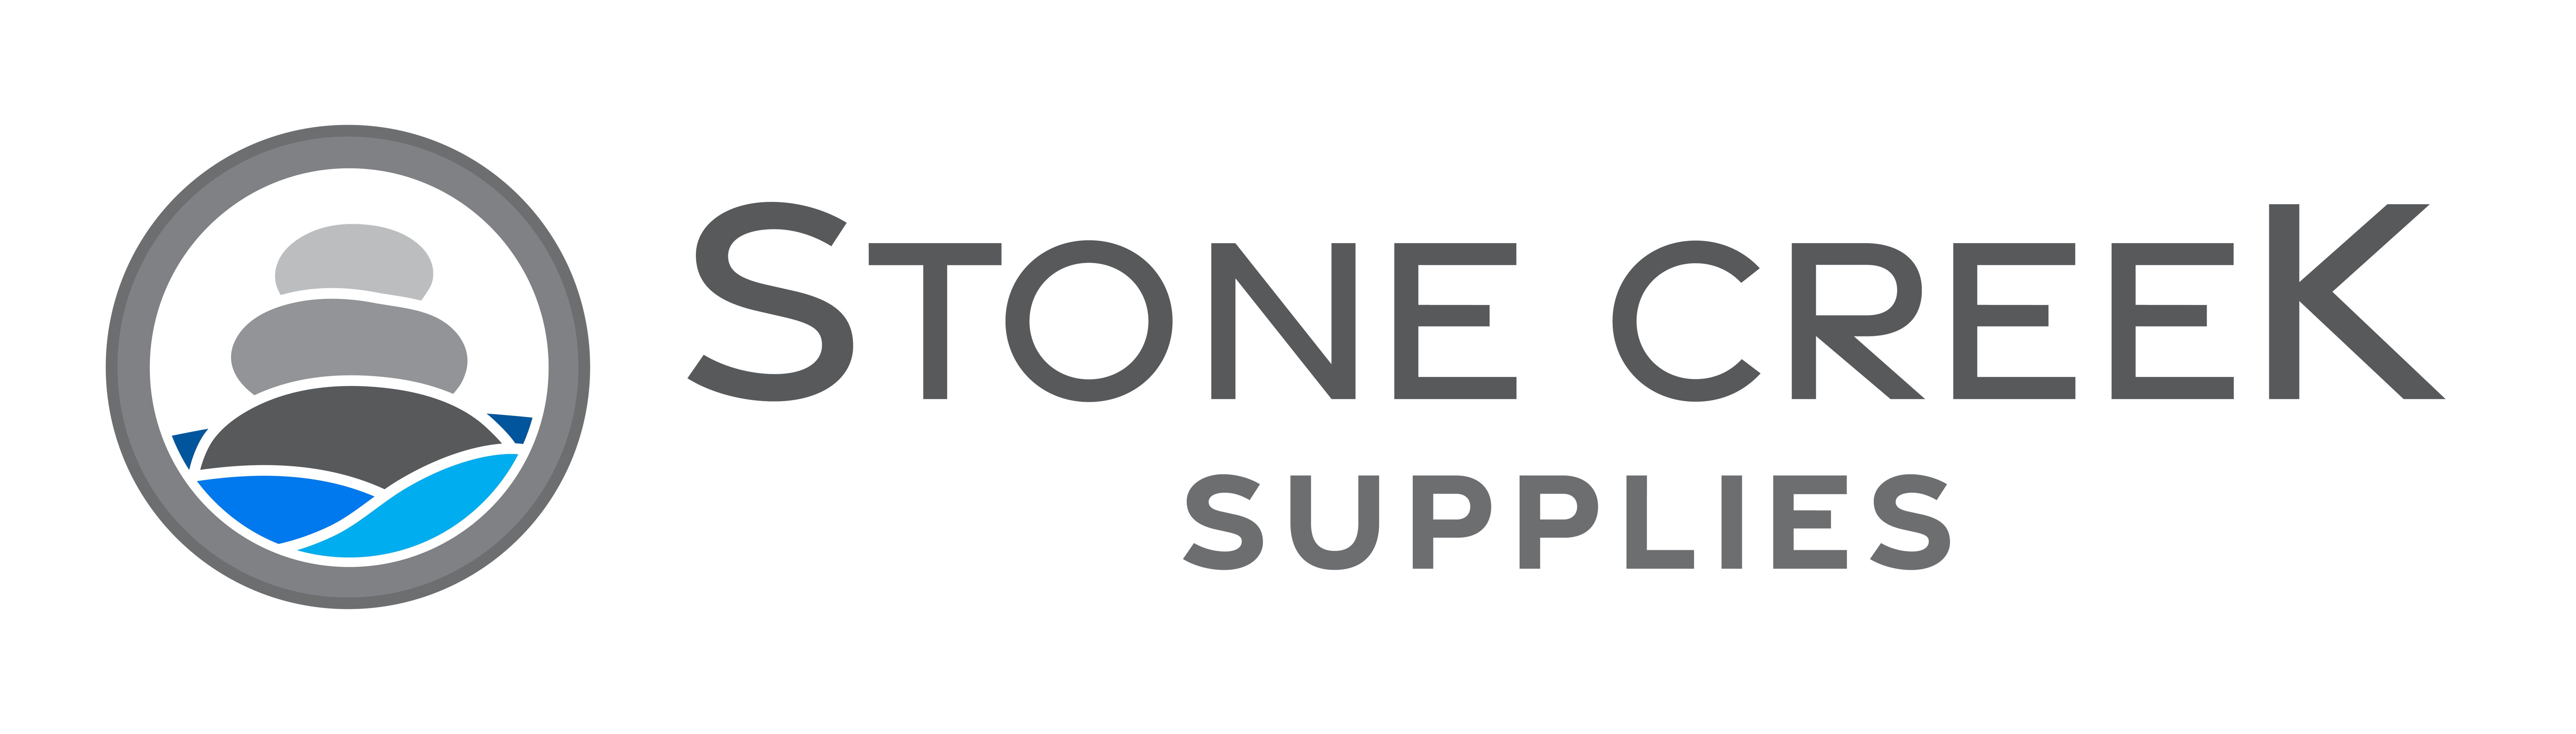 Stone Creek Supplies